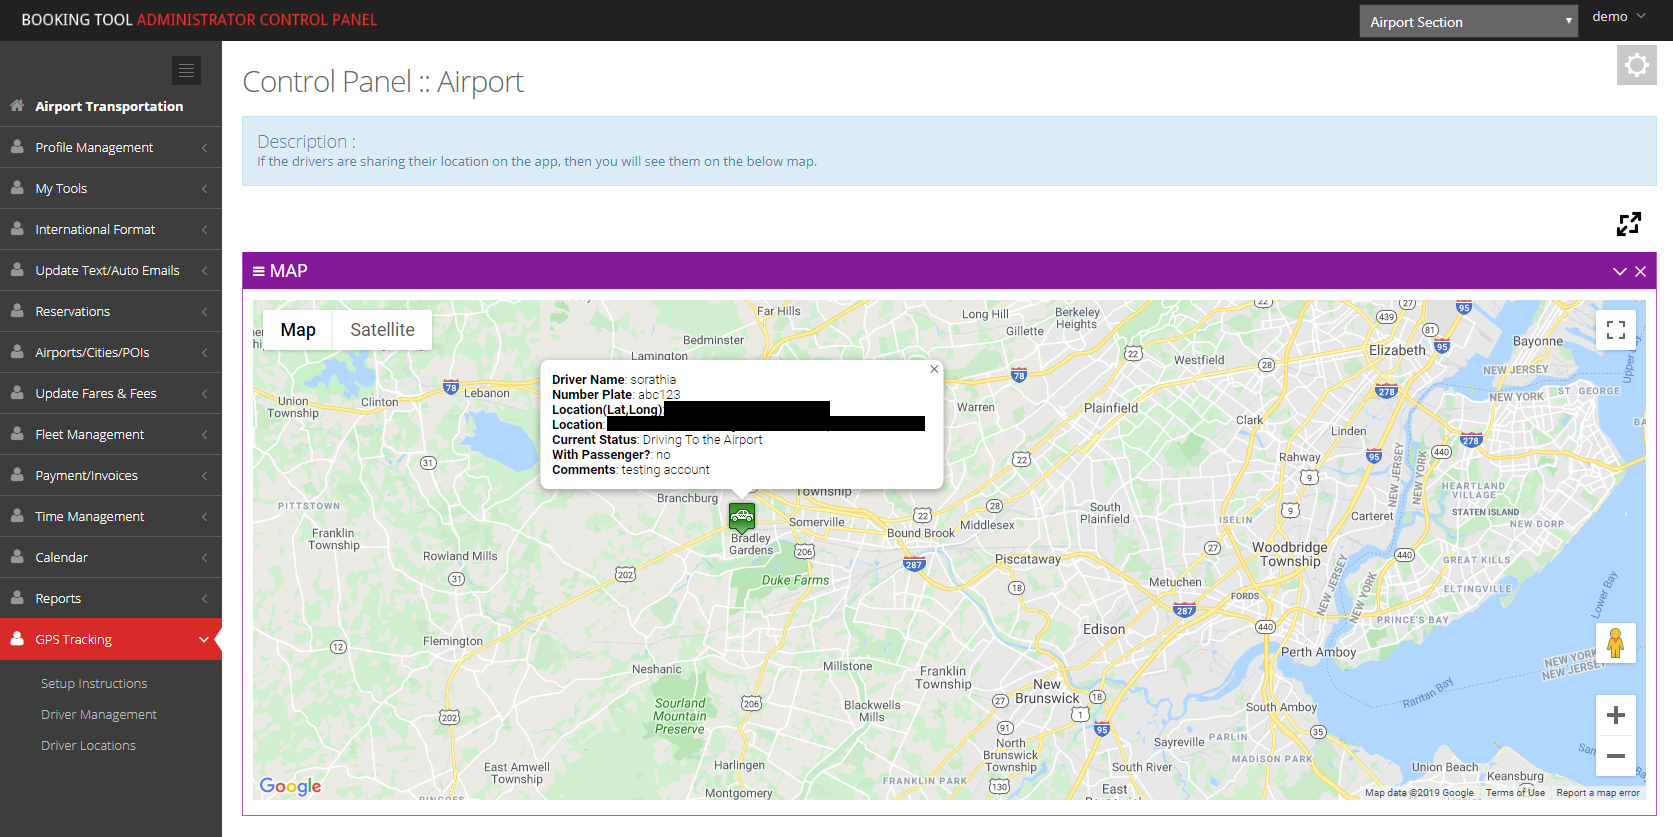 The Booking Tool maps screenshot